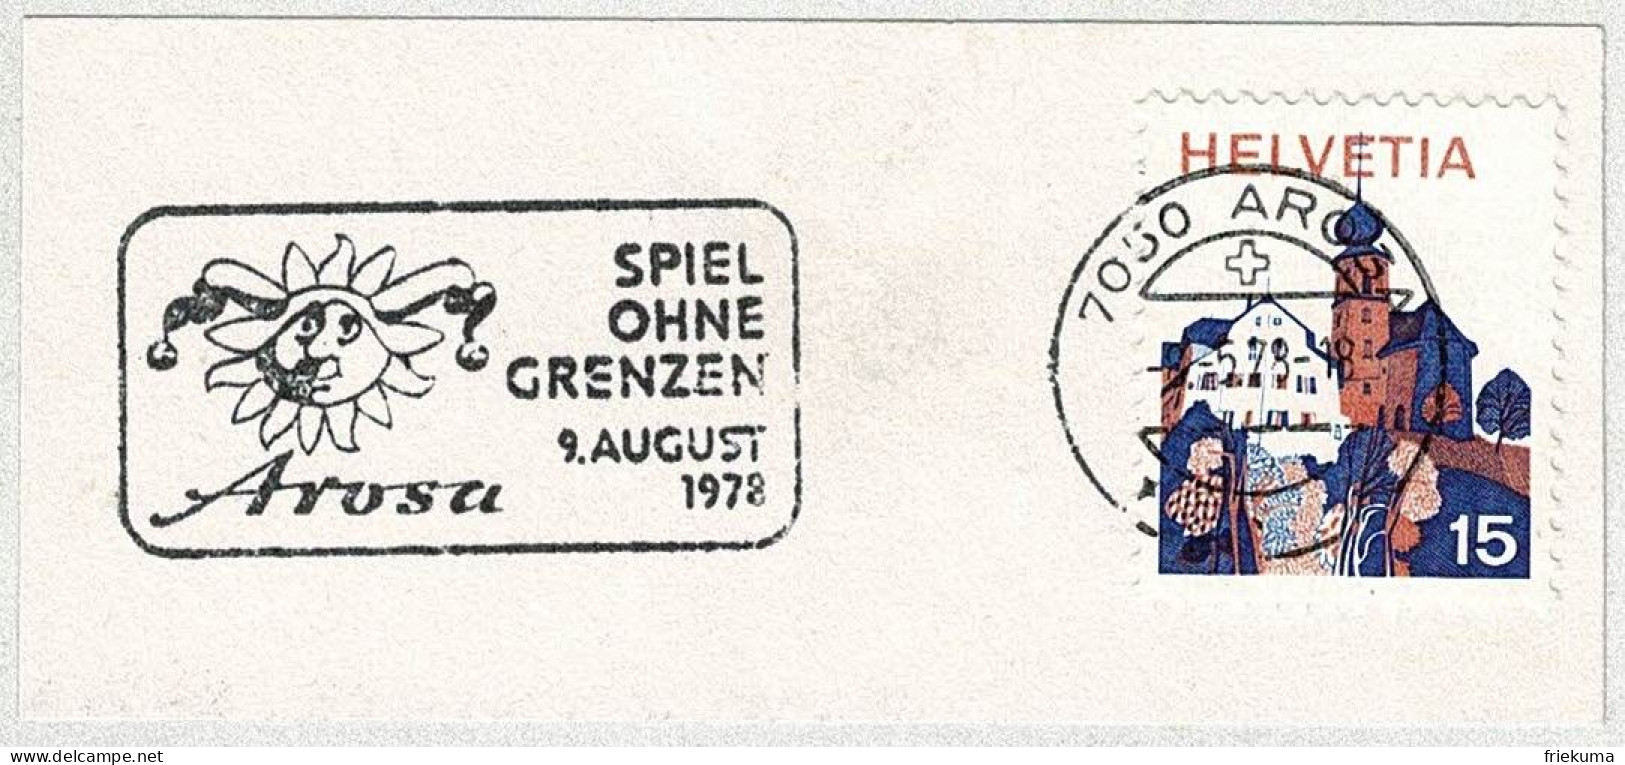 Schweiz / Helvetia 1978, Flaggenstempel Spiel Ohne Grenzen Arosa, Jeu Sans Frontières / Play Without Limits - Unclassified